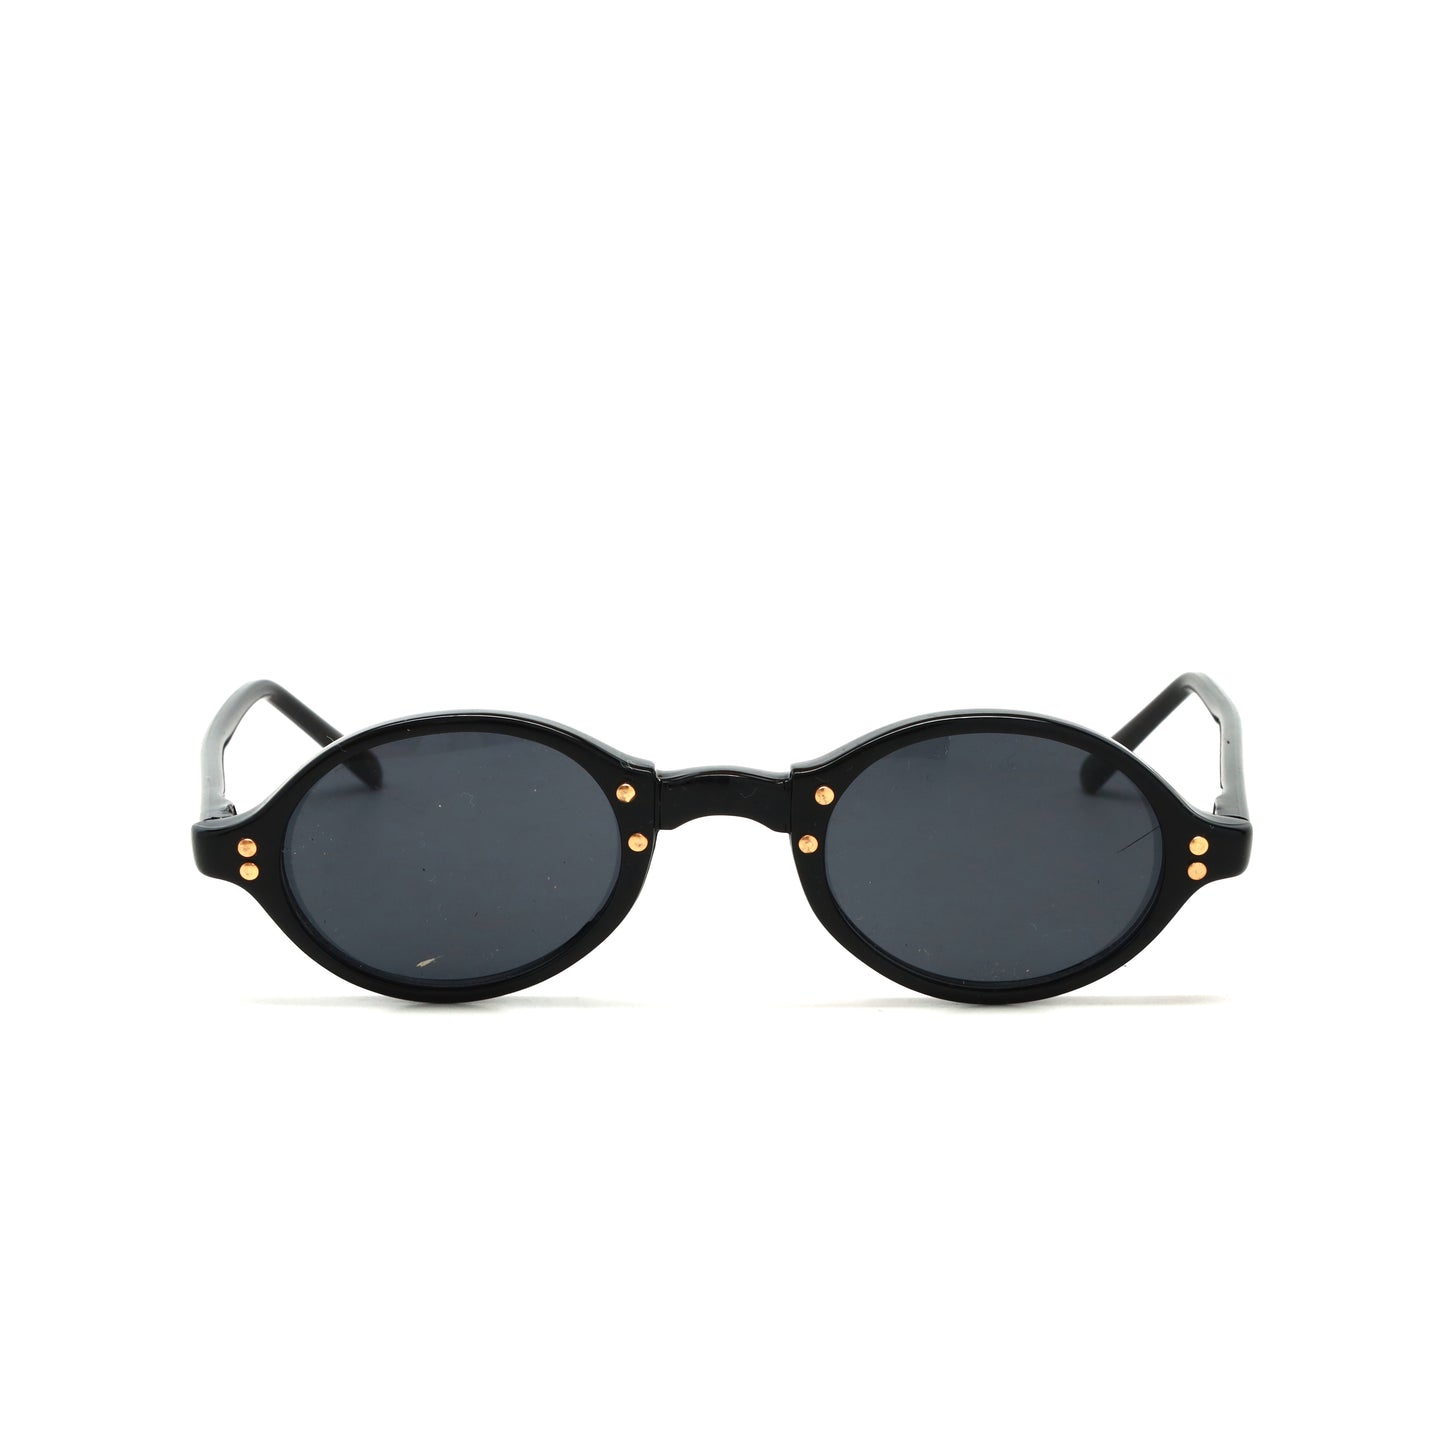 New Old Stock 1990s Alexine Slim Jet Black Oval Frame Sunglasses